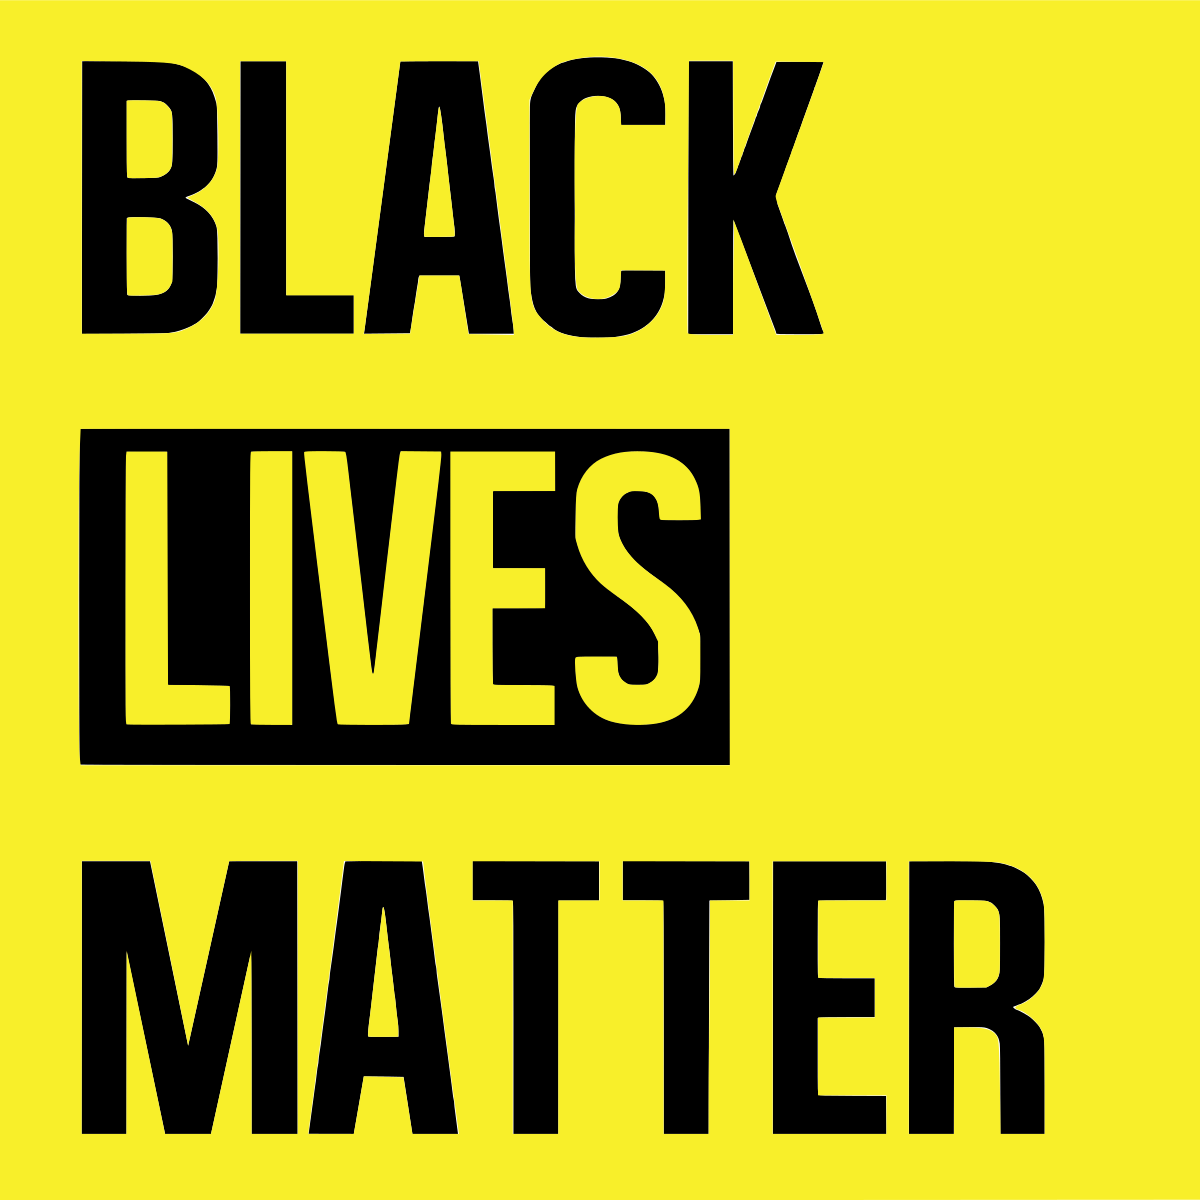 Black lives matterGirlsDon